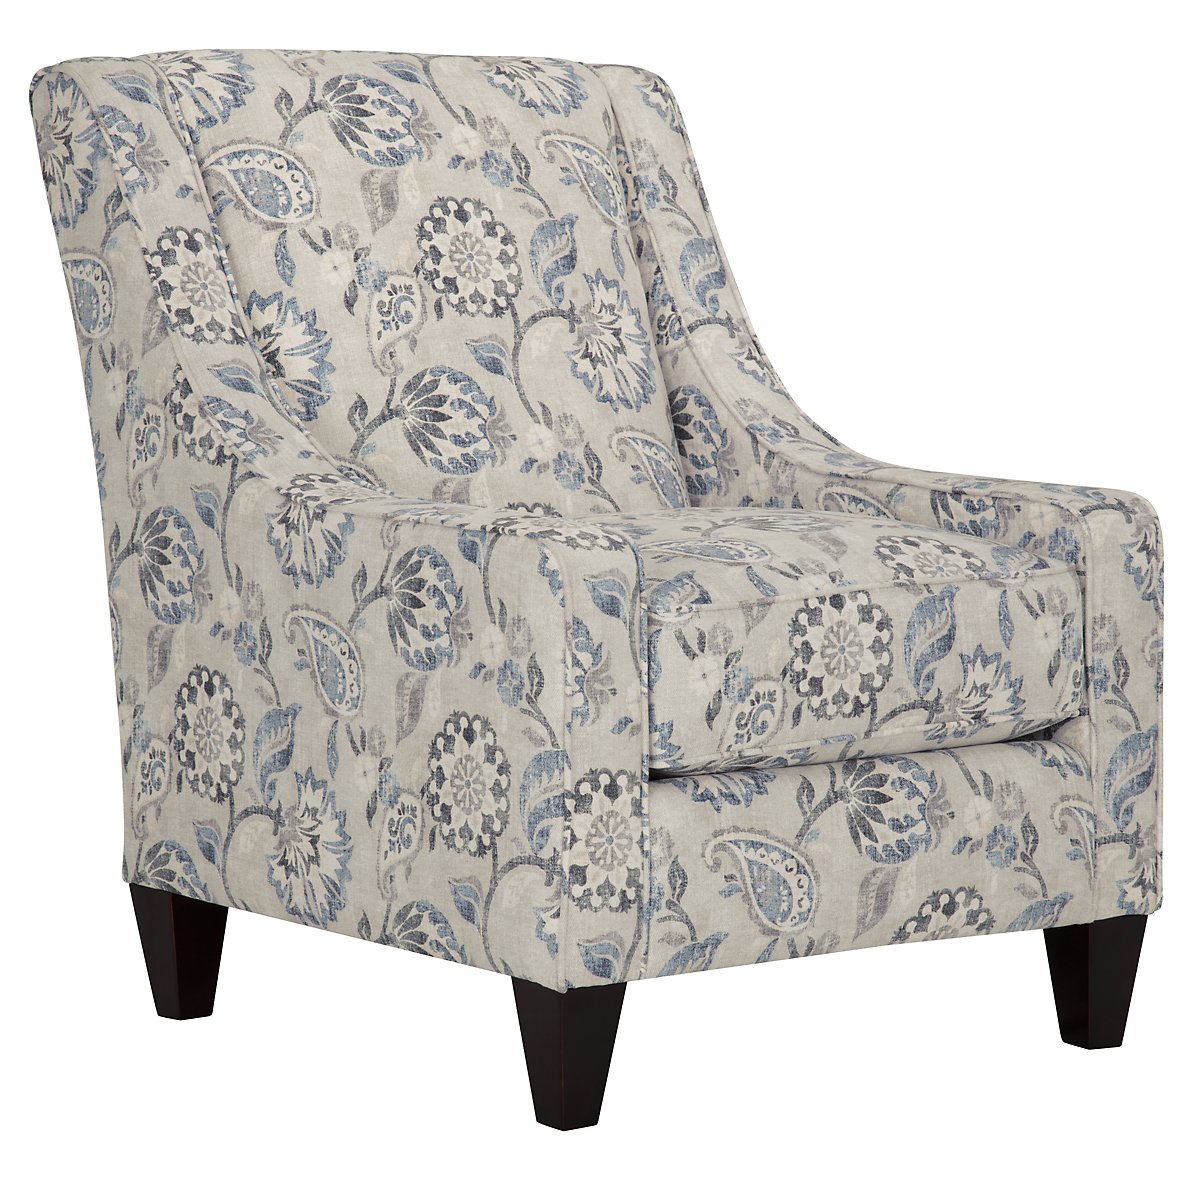 City Furniture Sylvie Blue Floral Accent Chair